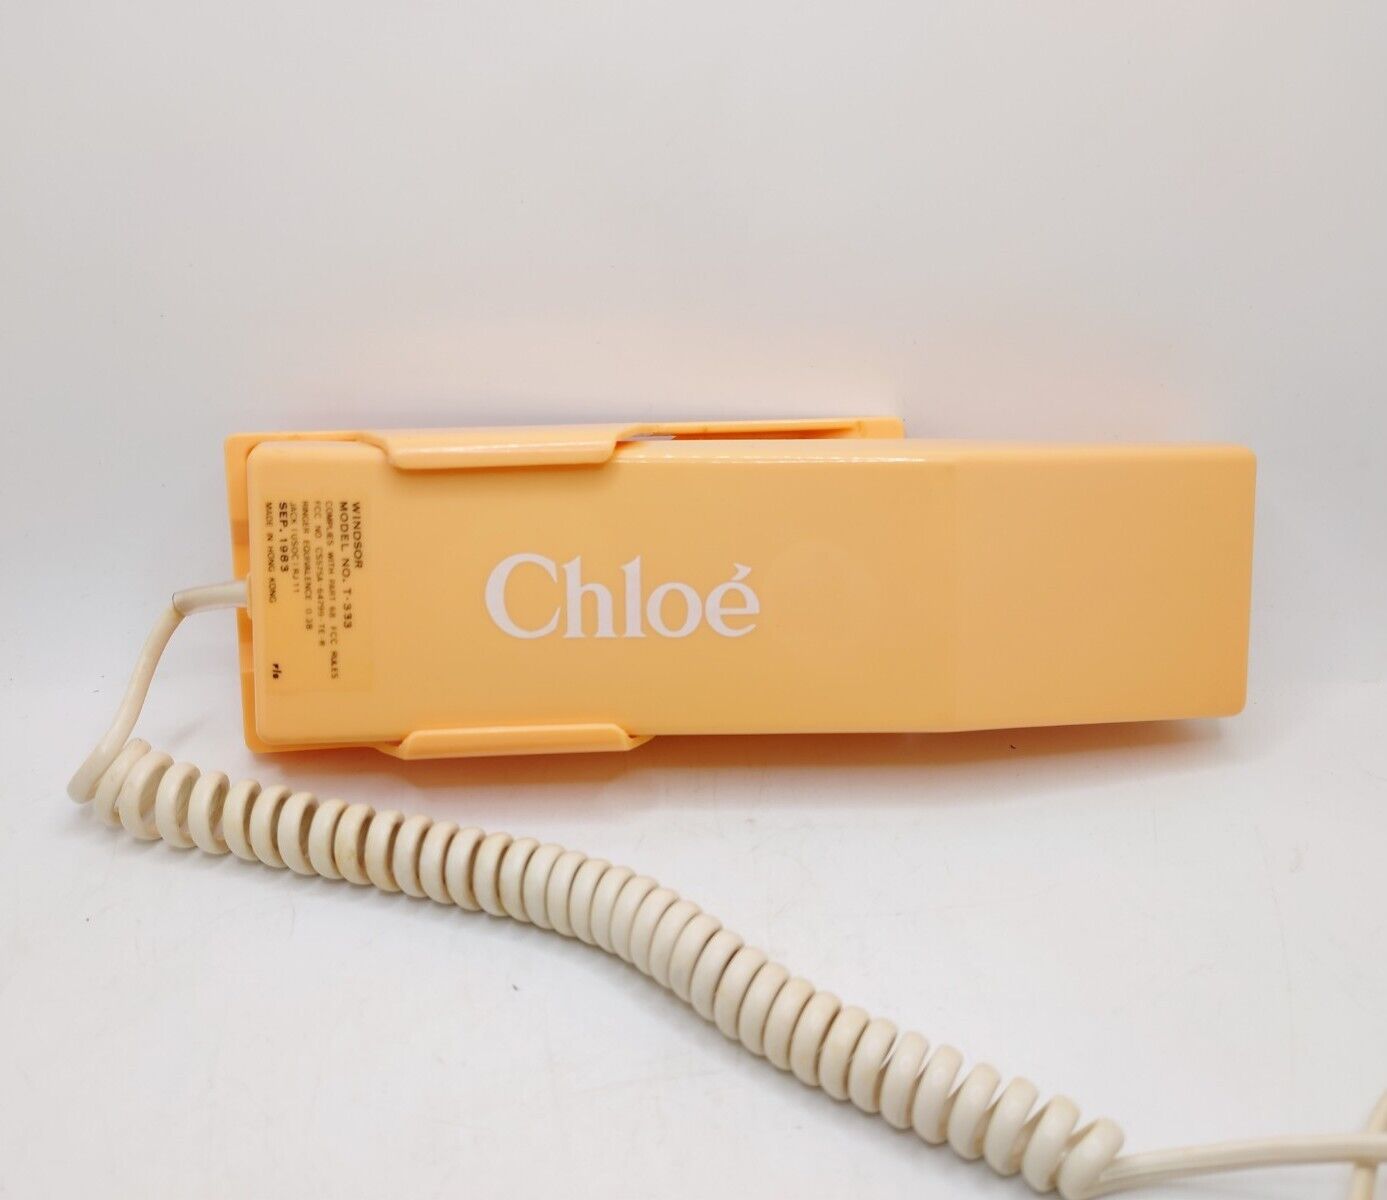 Vtg Chloe Lagerfeld Perfume Corded Slim Touch Tone Phone W/Wall Mount 1983 RARE